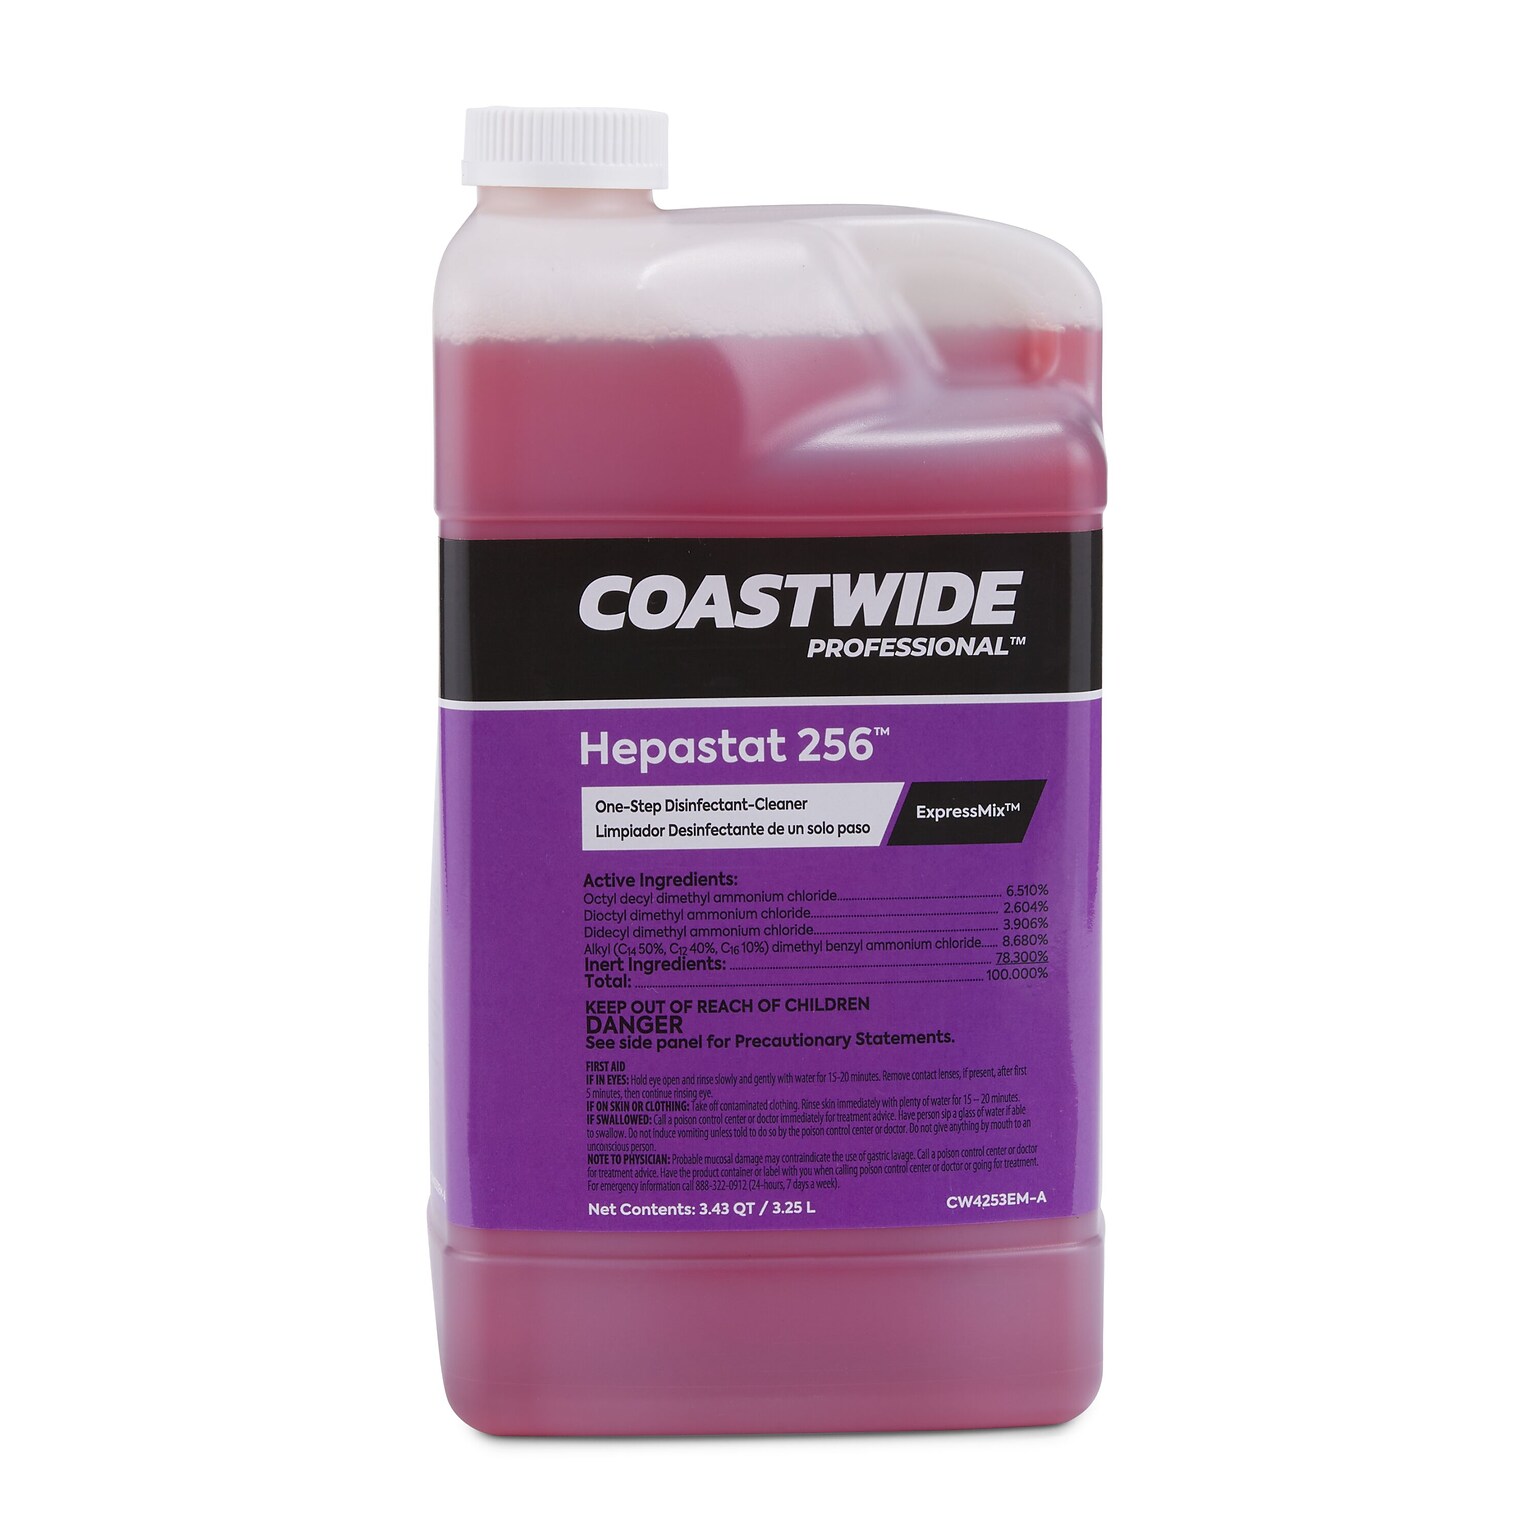 Coastwide Professional™ Disinfectant Hepastat 256 Concentrate for ExpressMix, 3.25L, 2/Pack (CW4253EM-A)